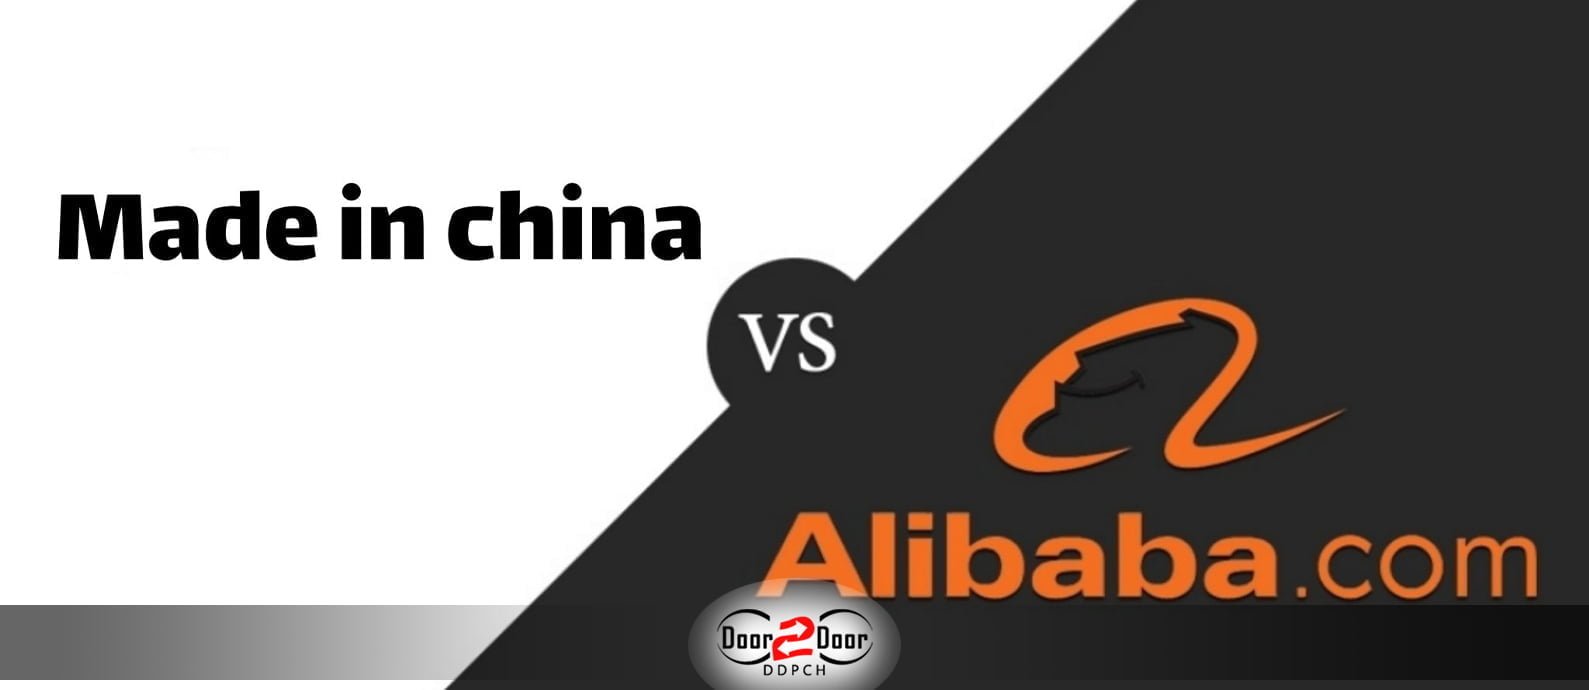 Alibaba VS made in china (Full Guide)